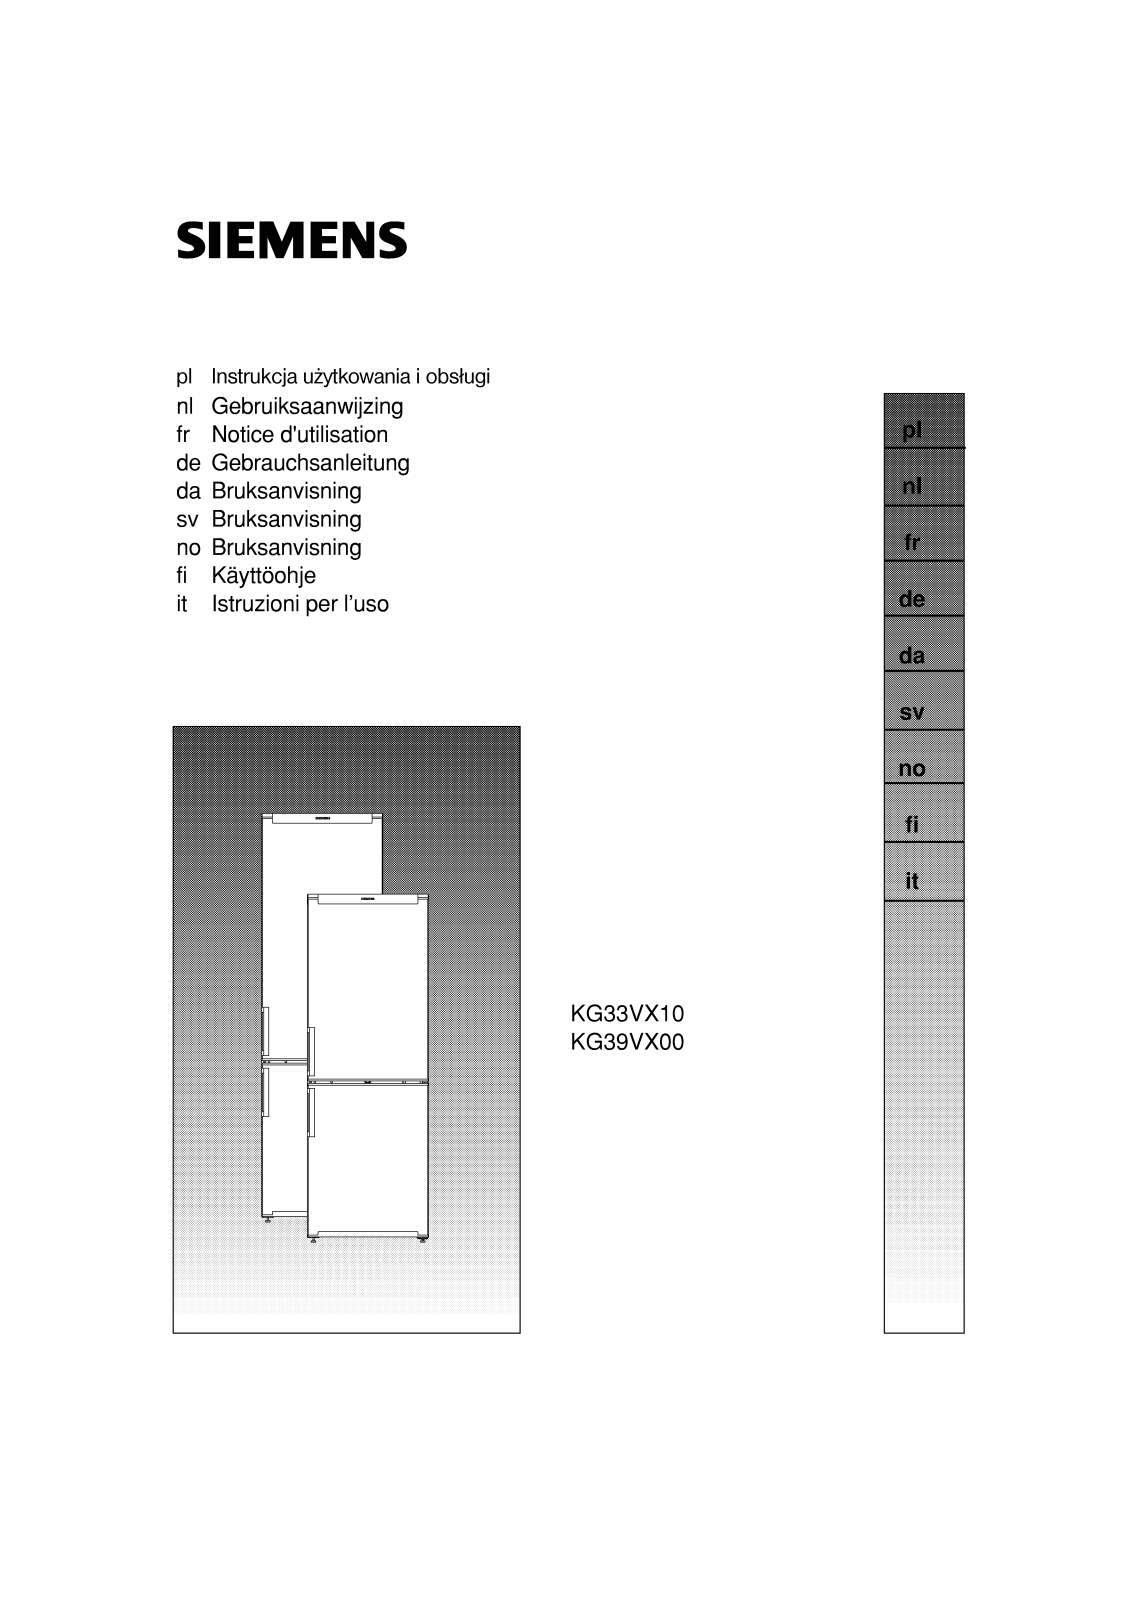 SIEMENS KG39VX00 User Manual